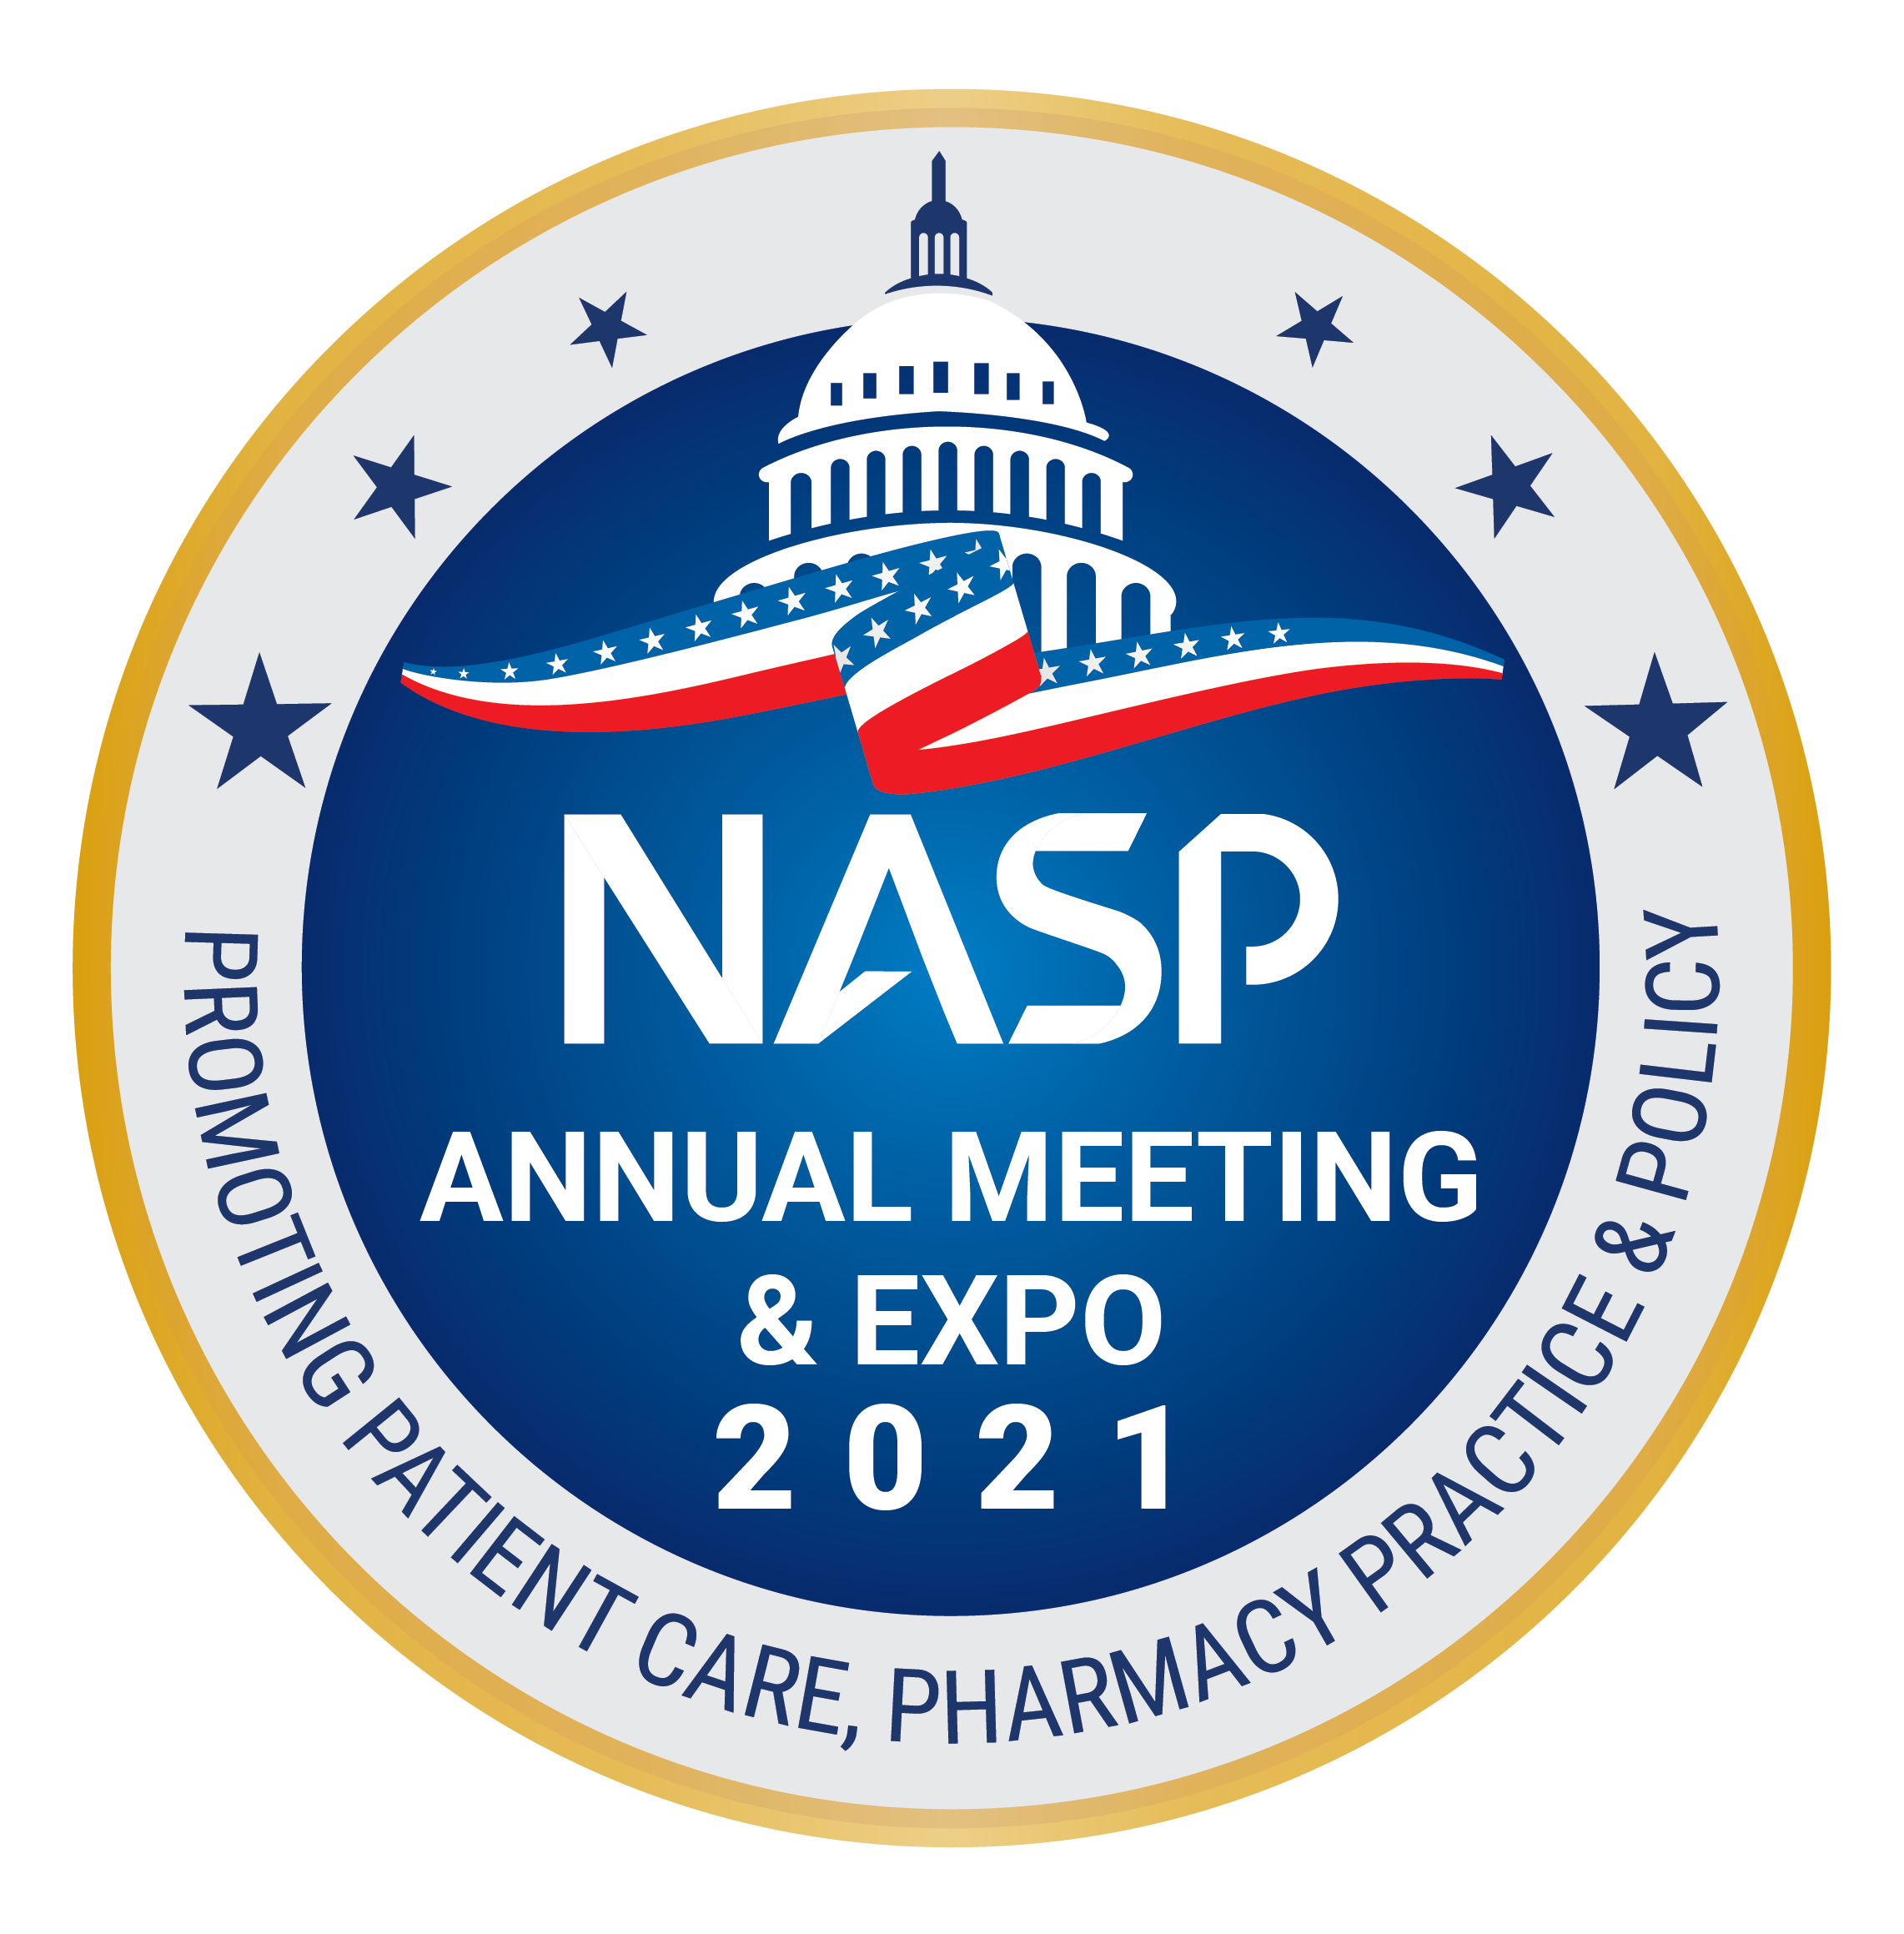 US Bioservices Executive Joins NASP Board of Directors NASP